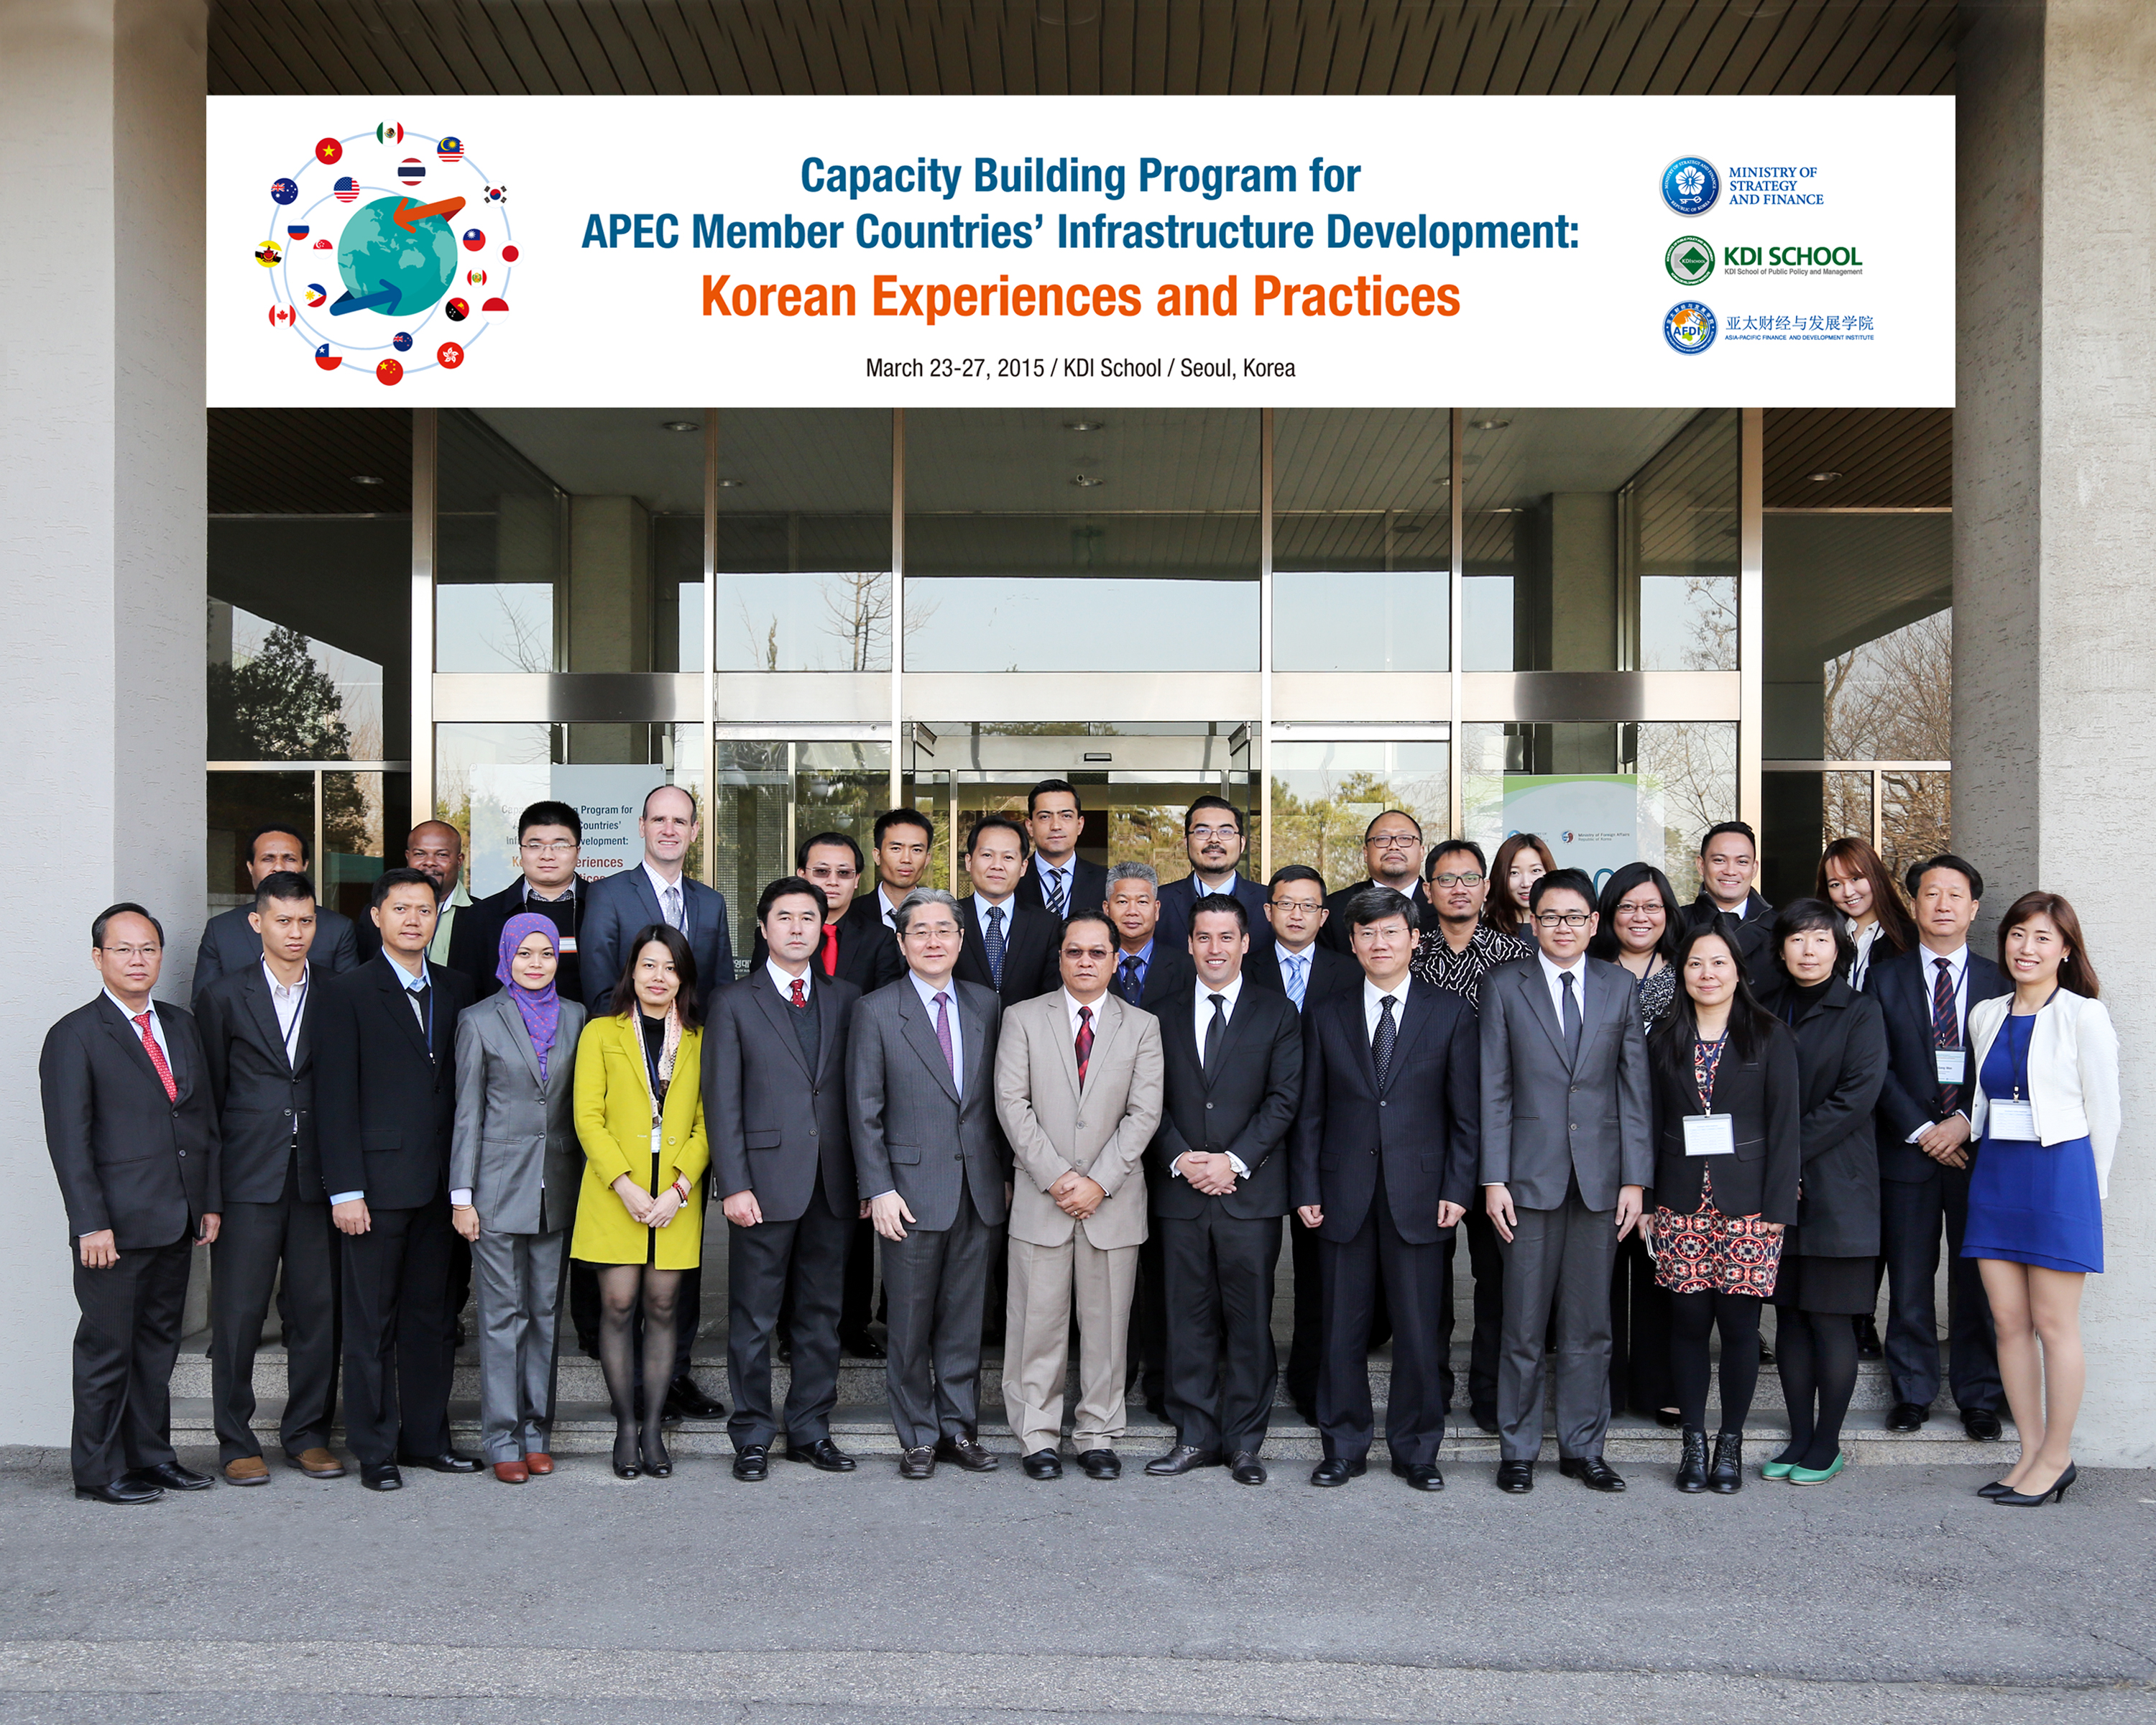 APEC Capacity Building Program for Members’ Infrastructure Development